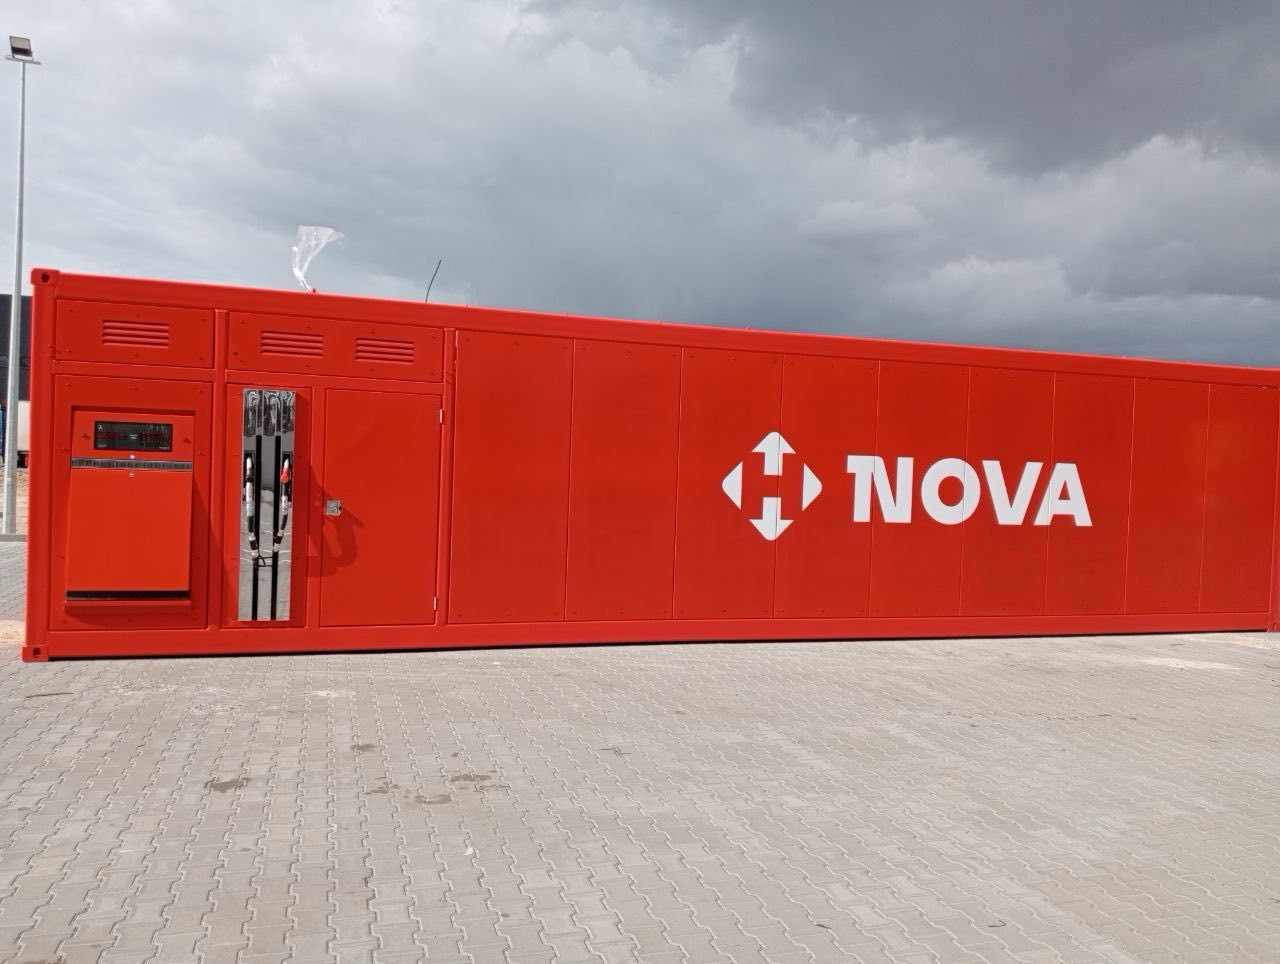 The NOVA Group, which includes Nova Poshta, has established a company for electricity generation